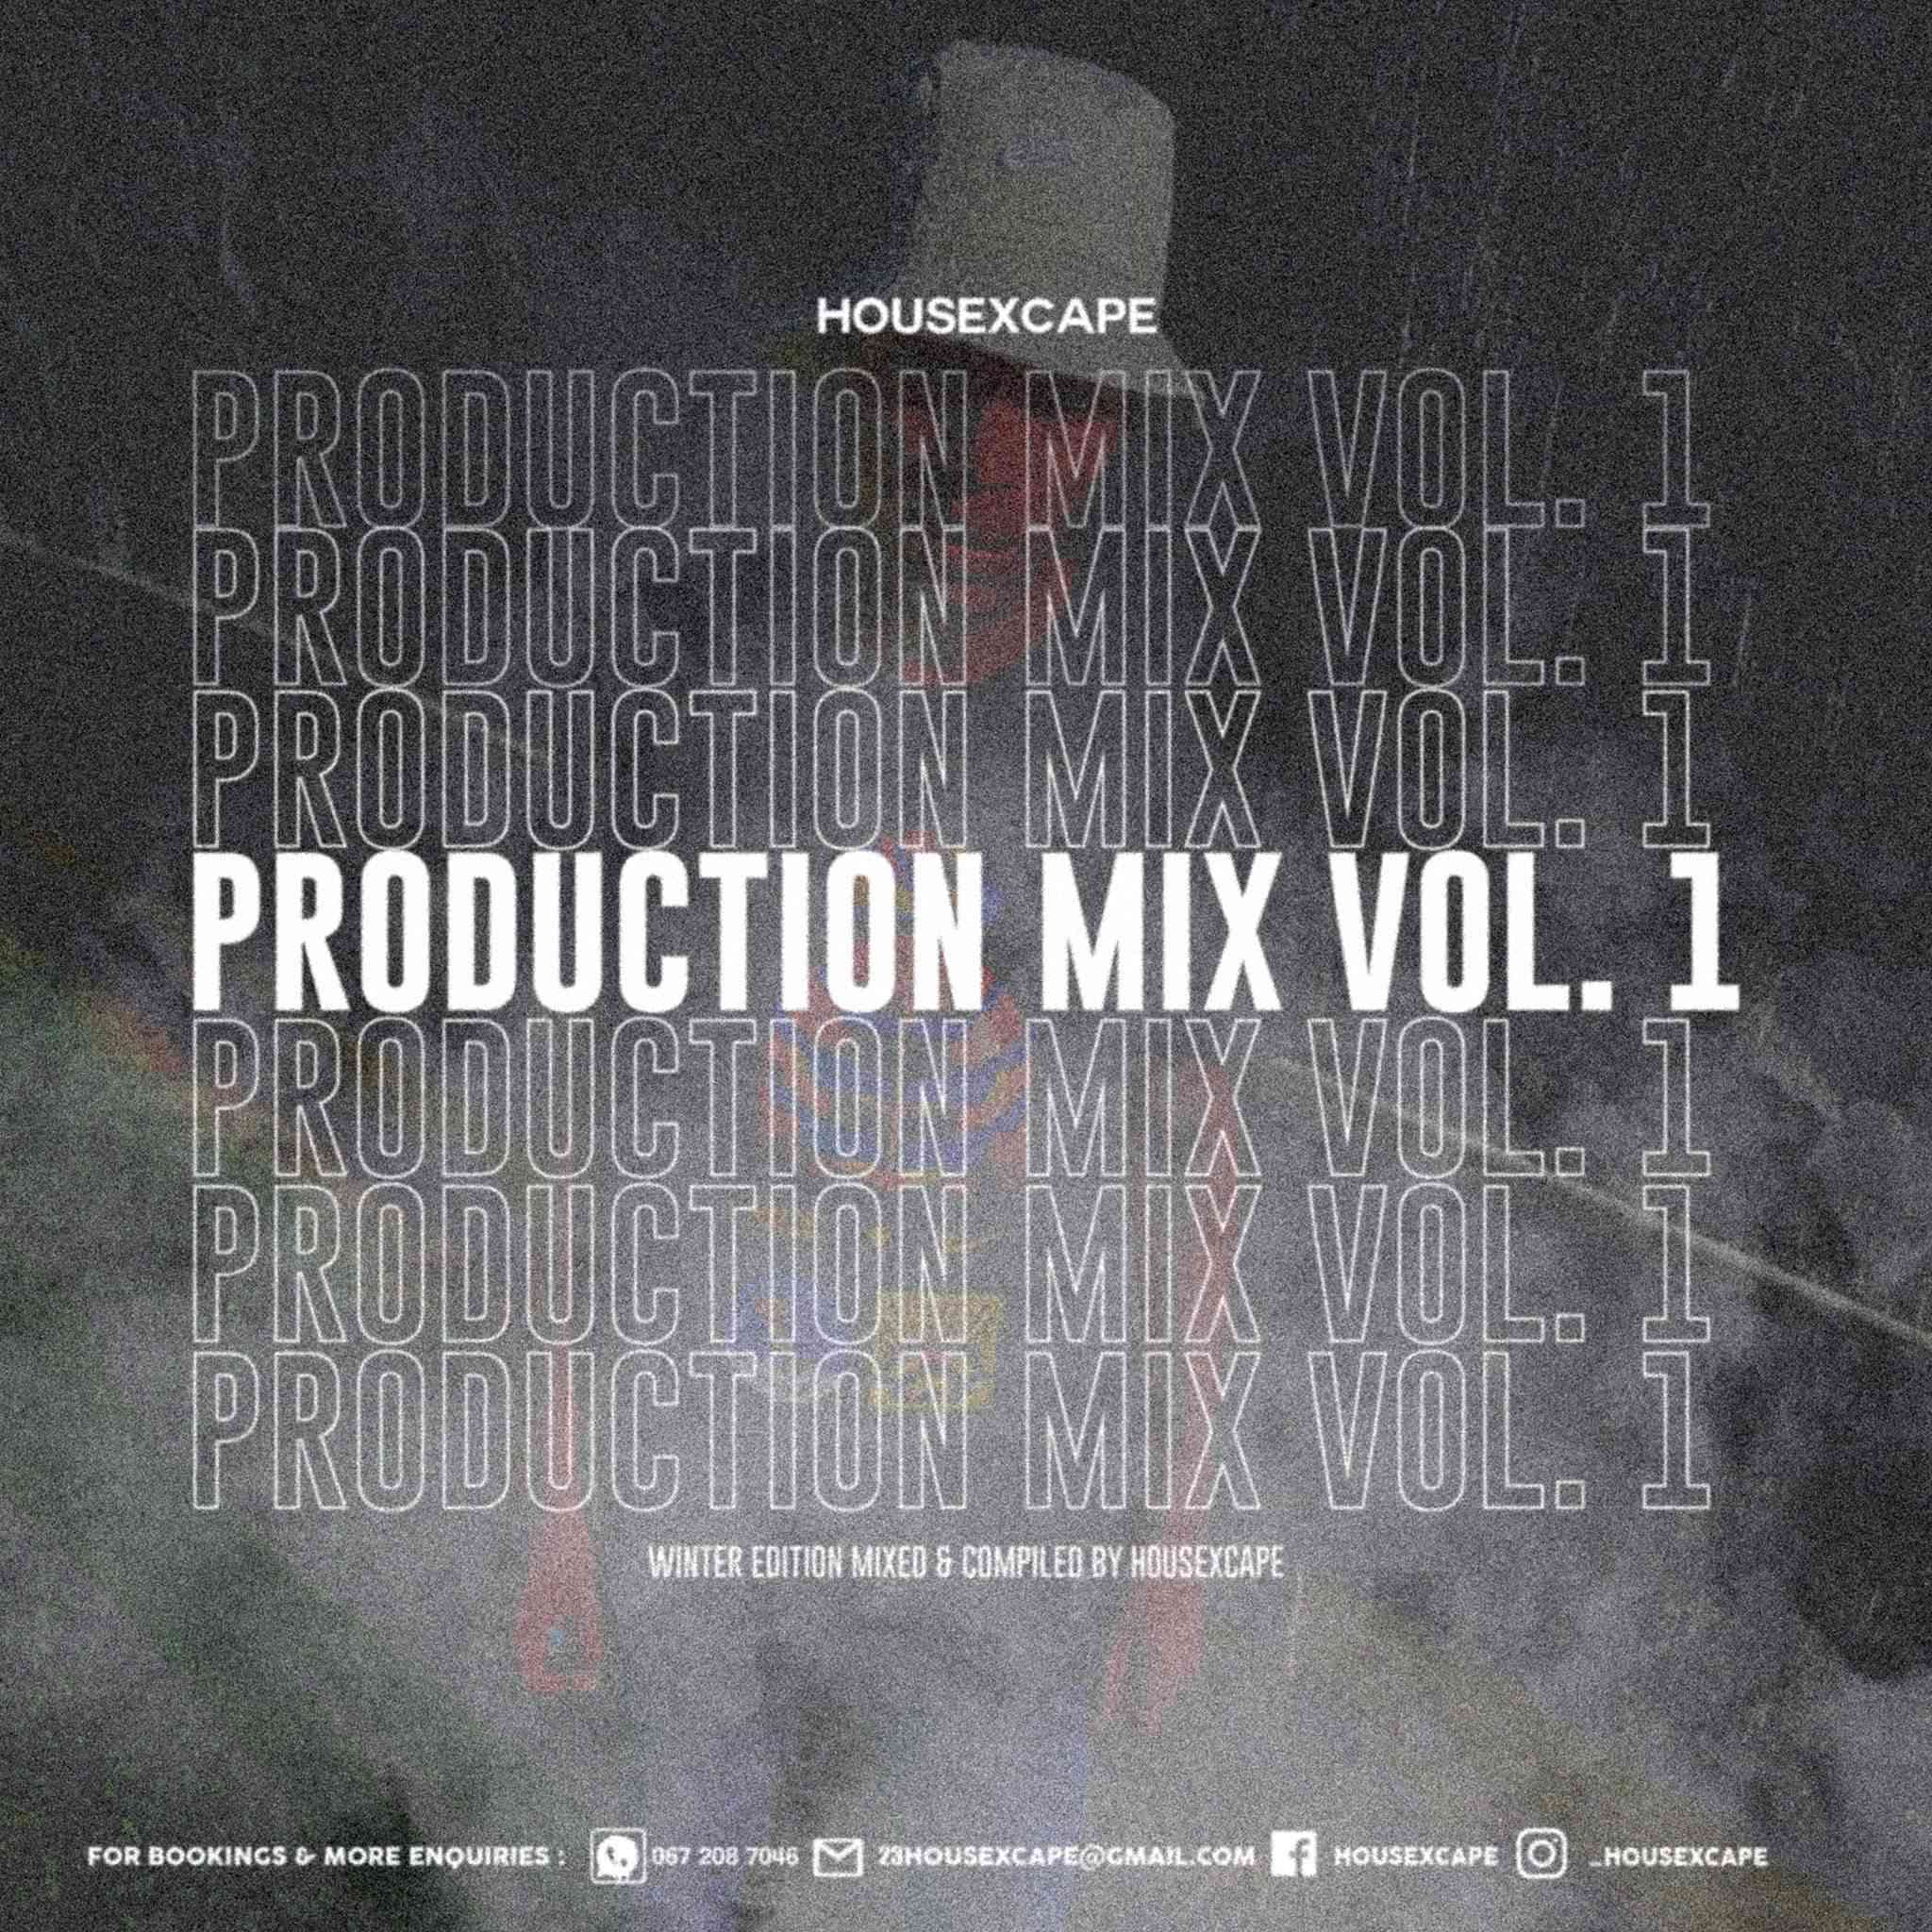 HouseXcape Production Mix Vol. 1 Mix (Winter Edition)